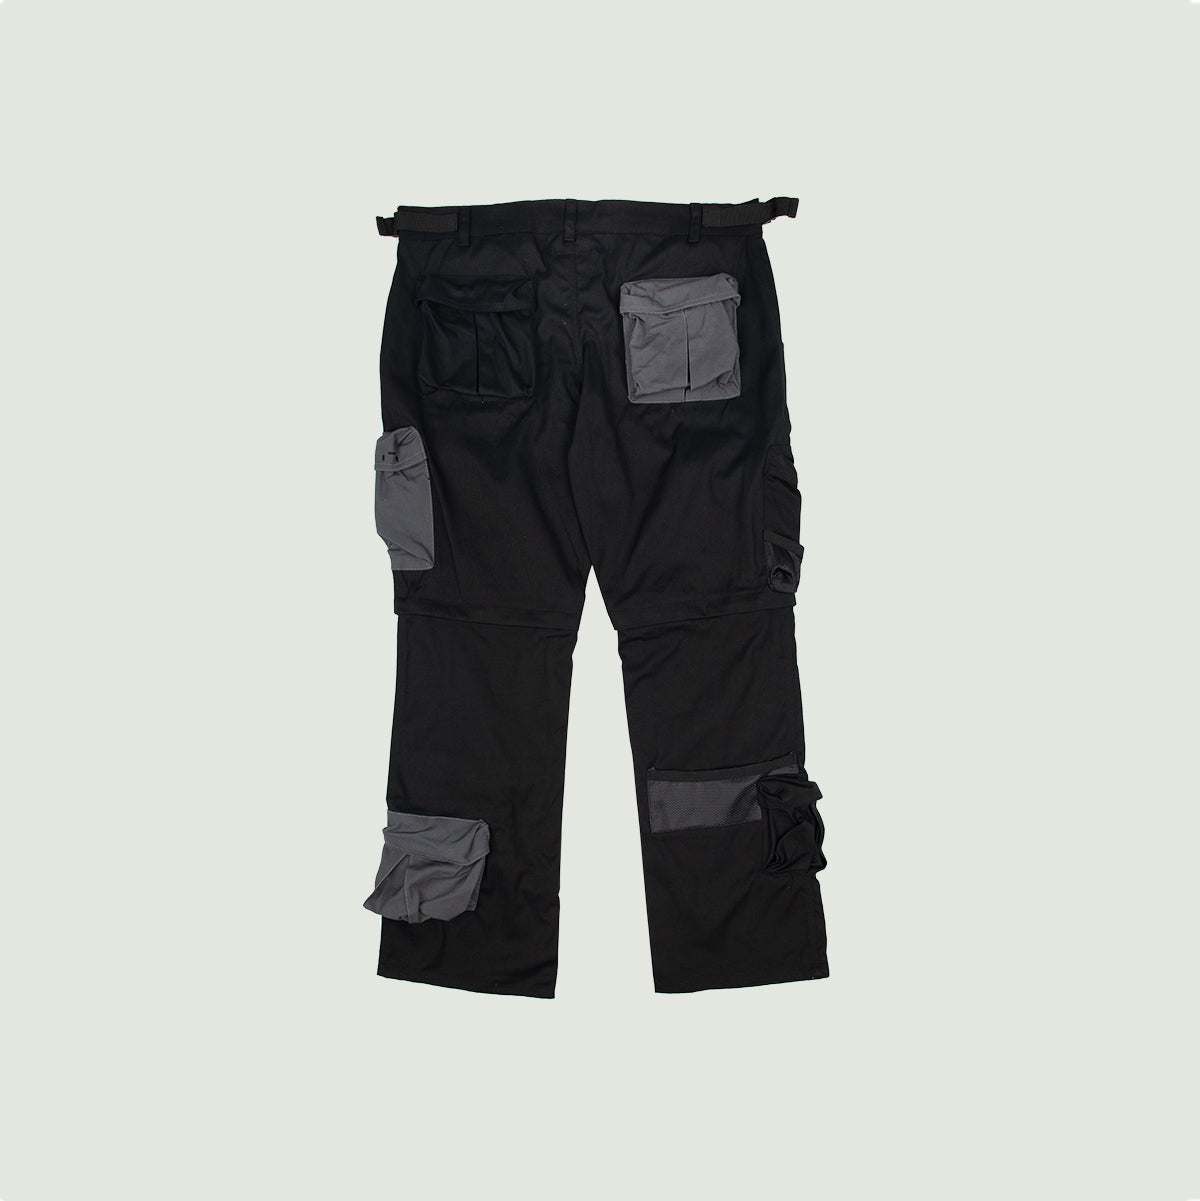 Militia Black cargo pants